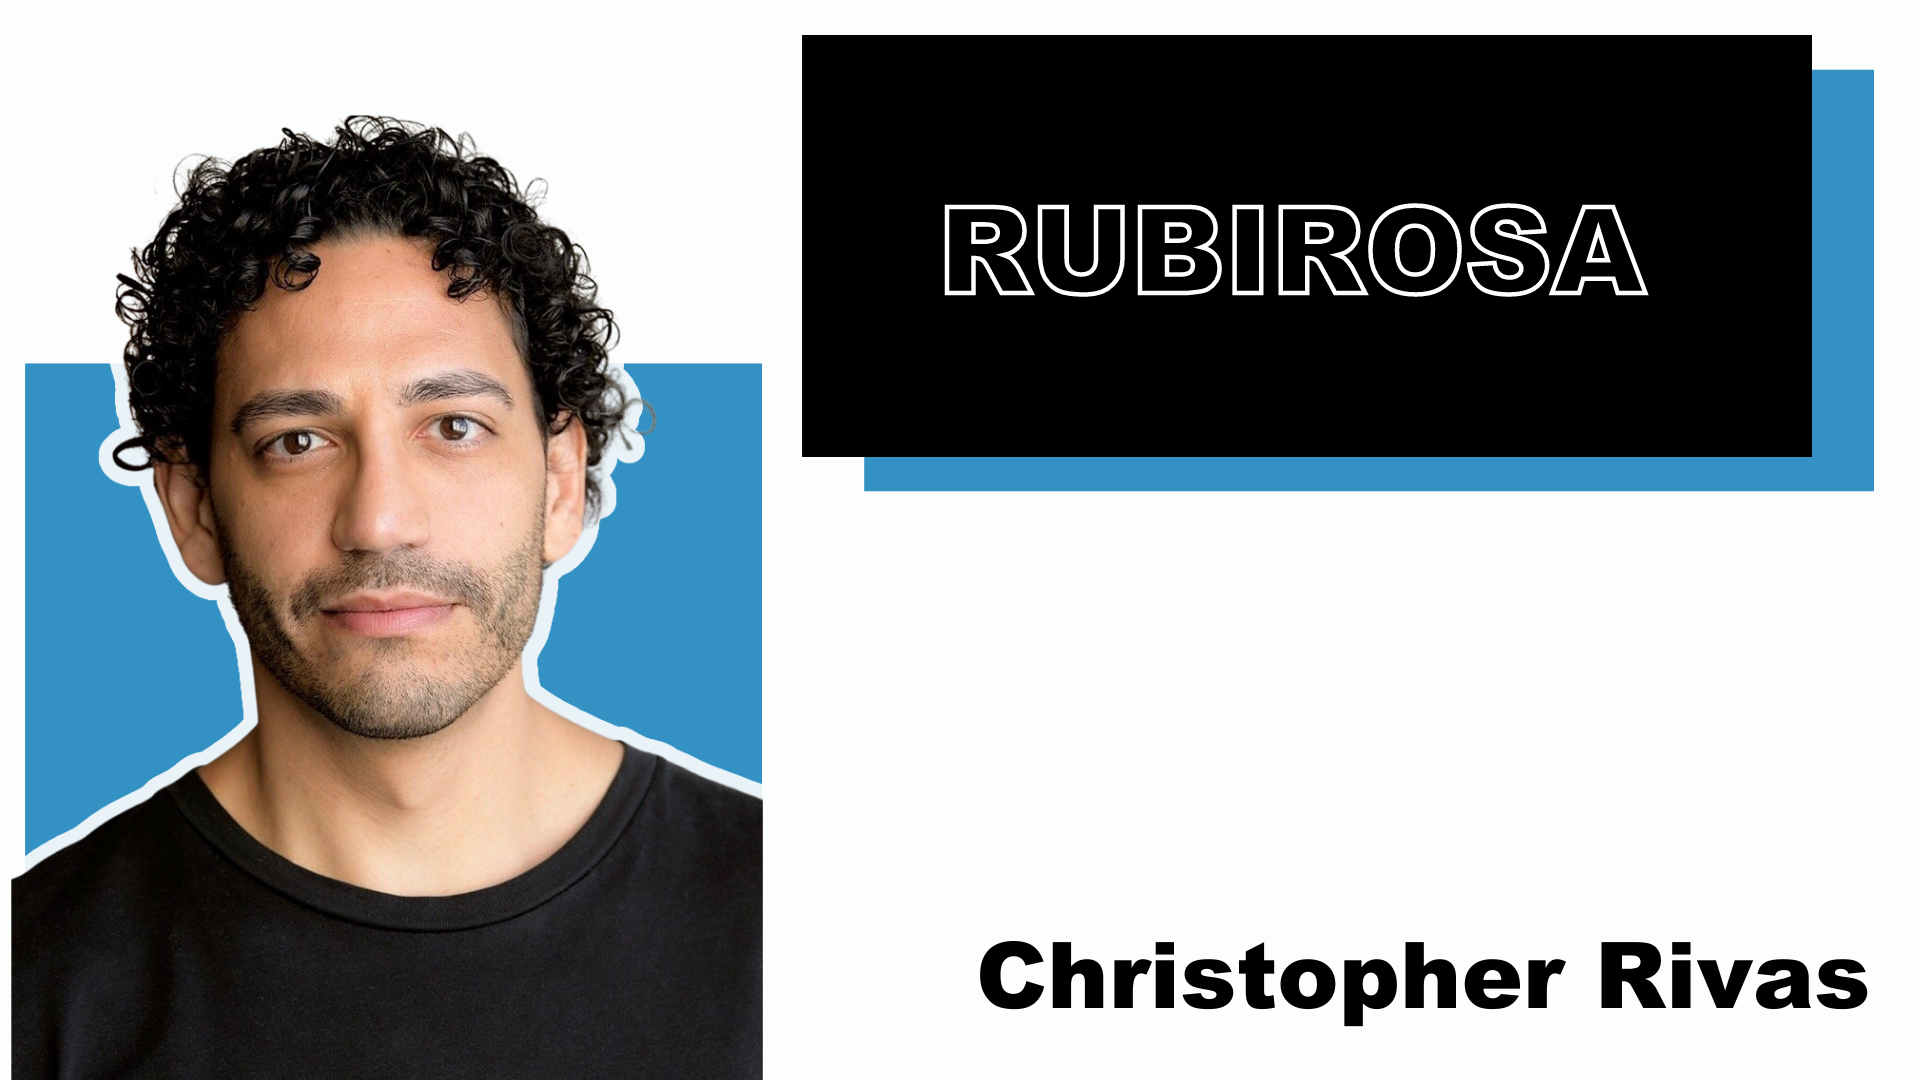 Rubirosa, Christopher Rivas